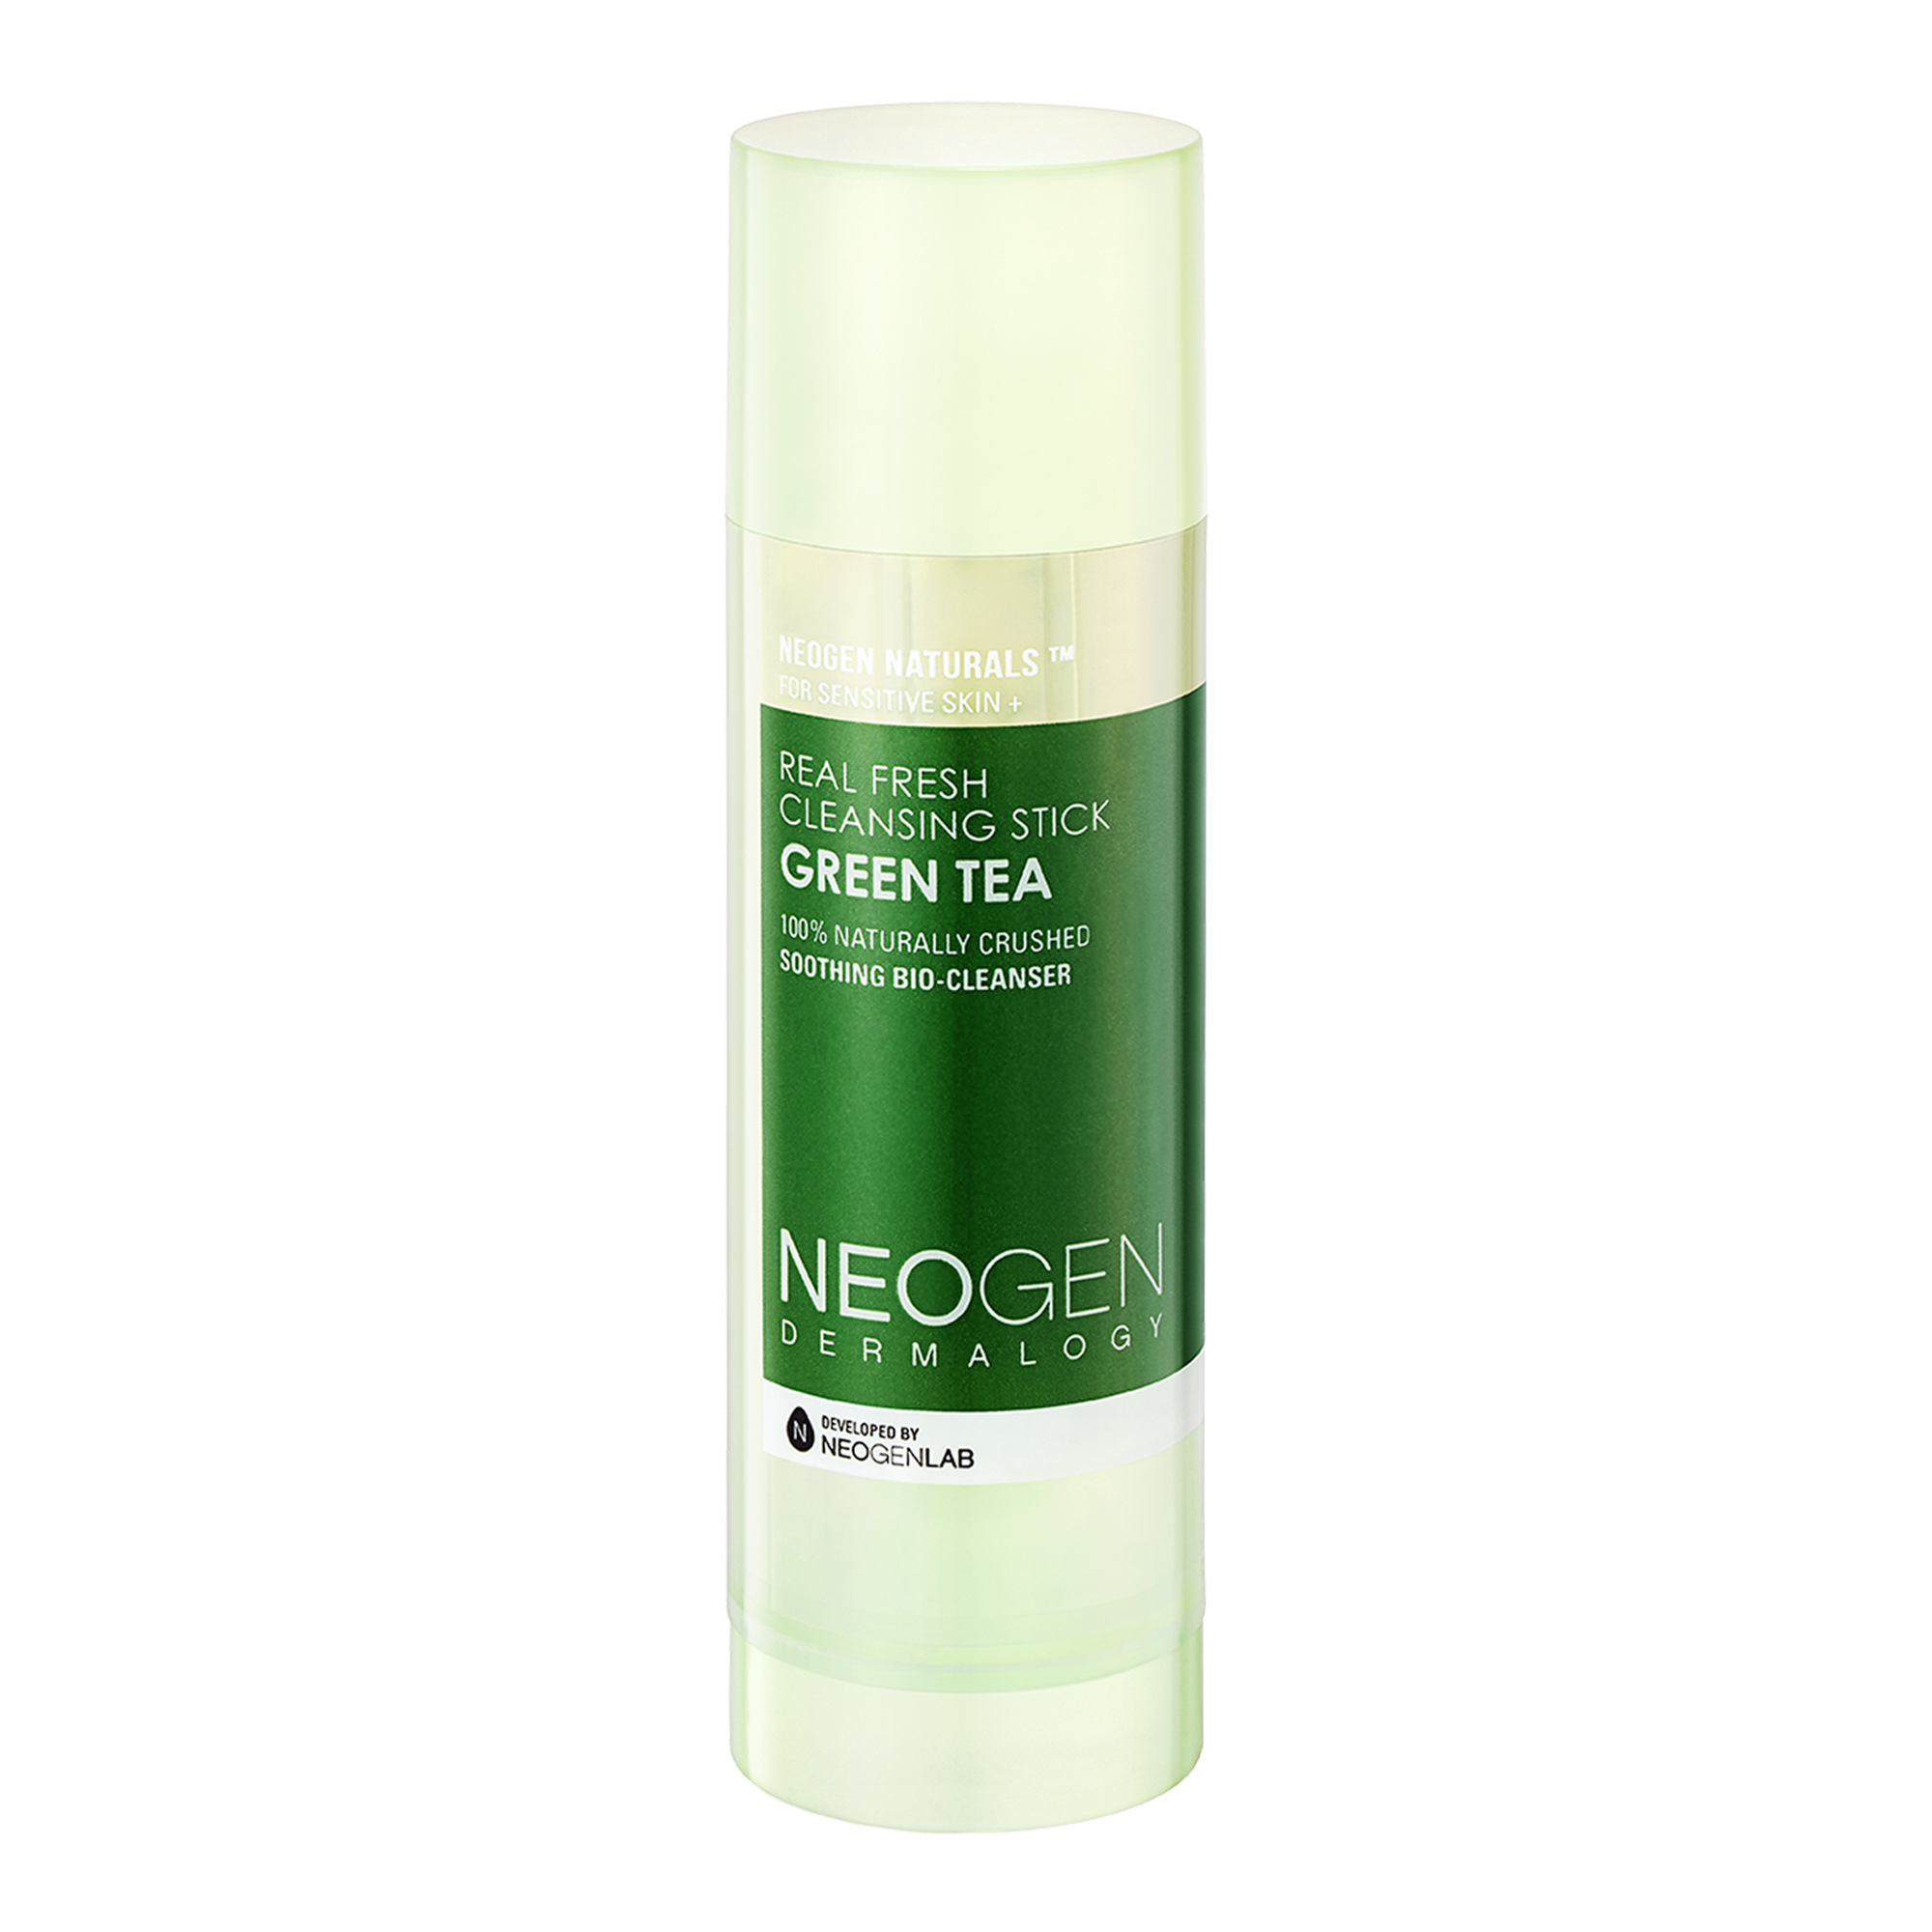 NEOGEN DERMALOGY REAL FRESH CLEANSING STICK GREEN TEA 2.82 oz / 80g